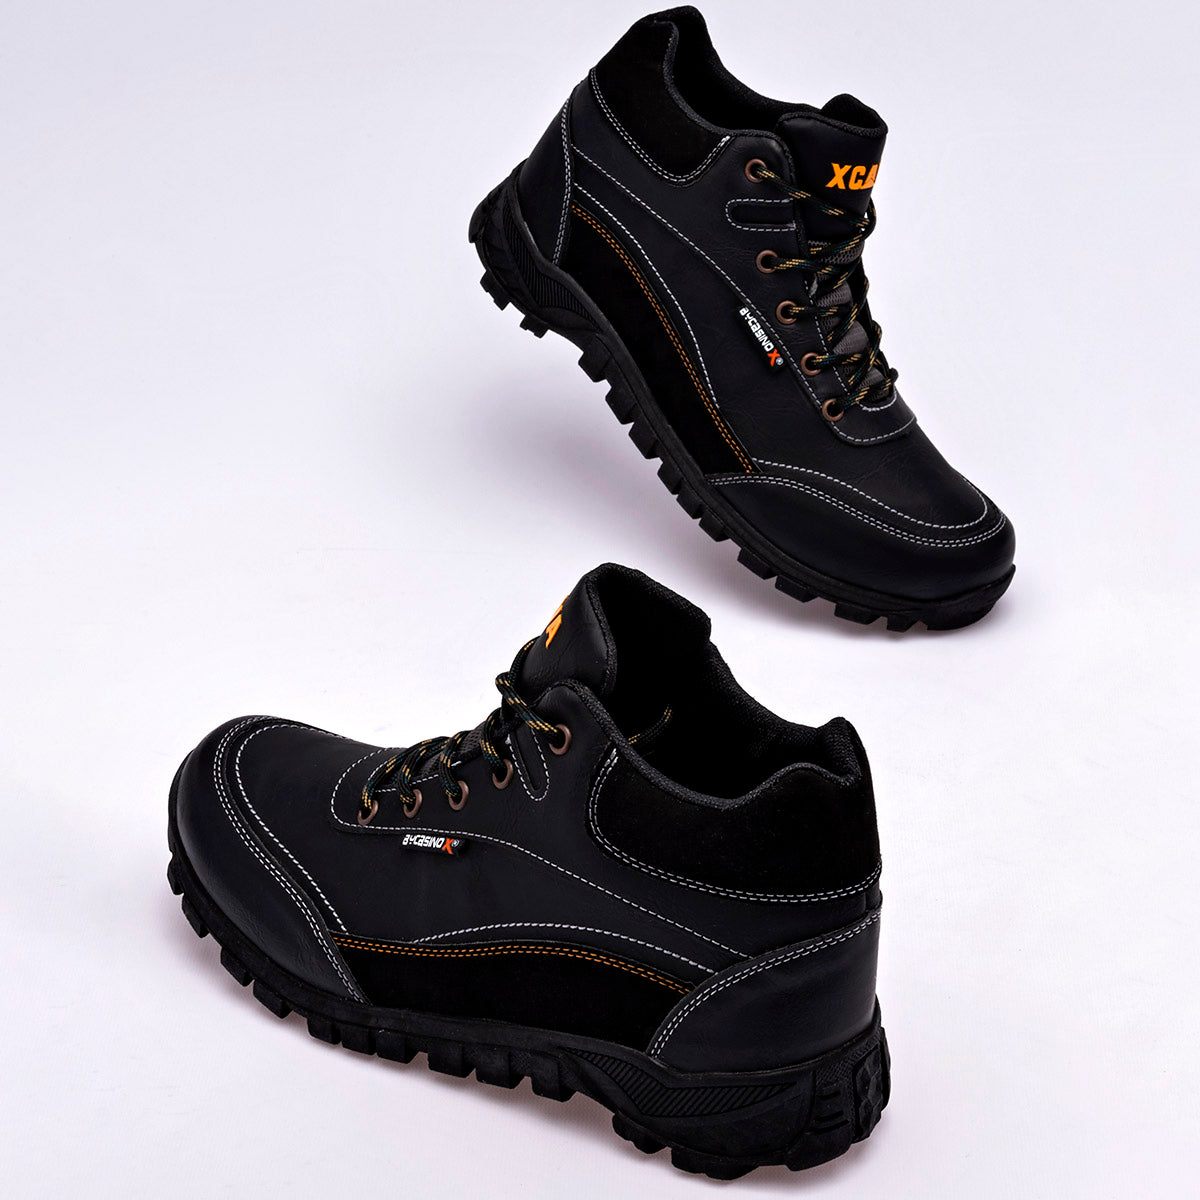 Pakar.com - Mayo: Regalos para mamá | Zapato para hacer hiking para hombre cod-108212